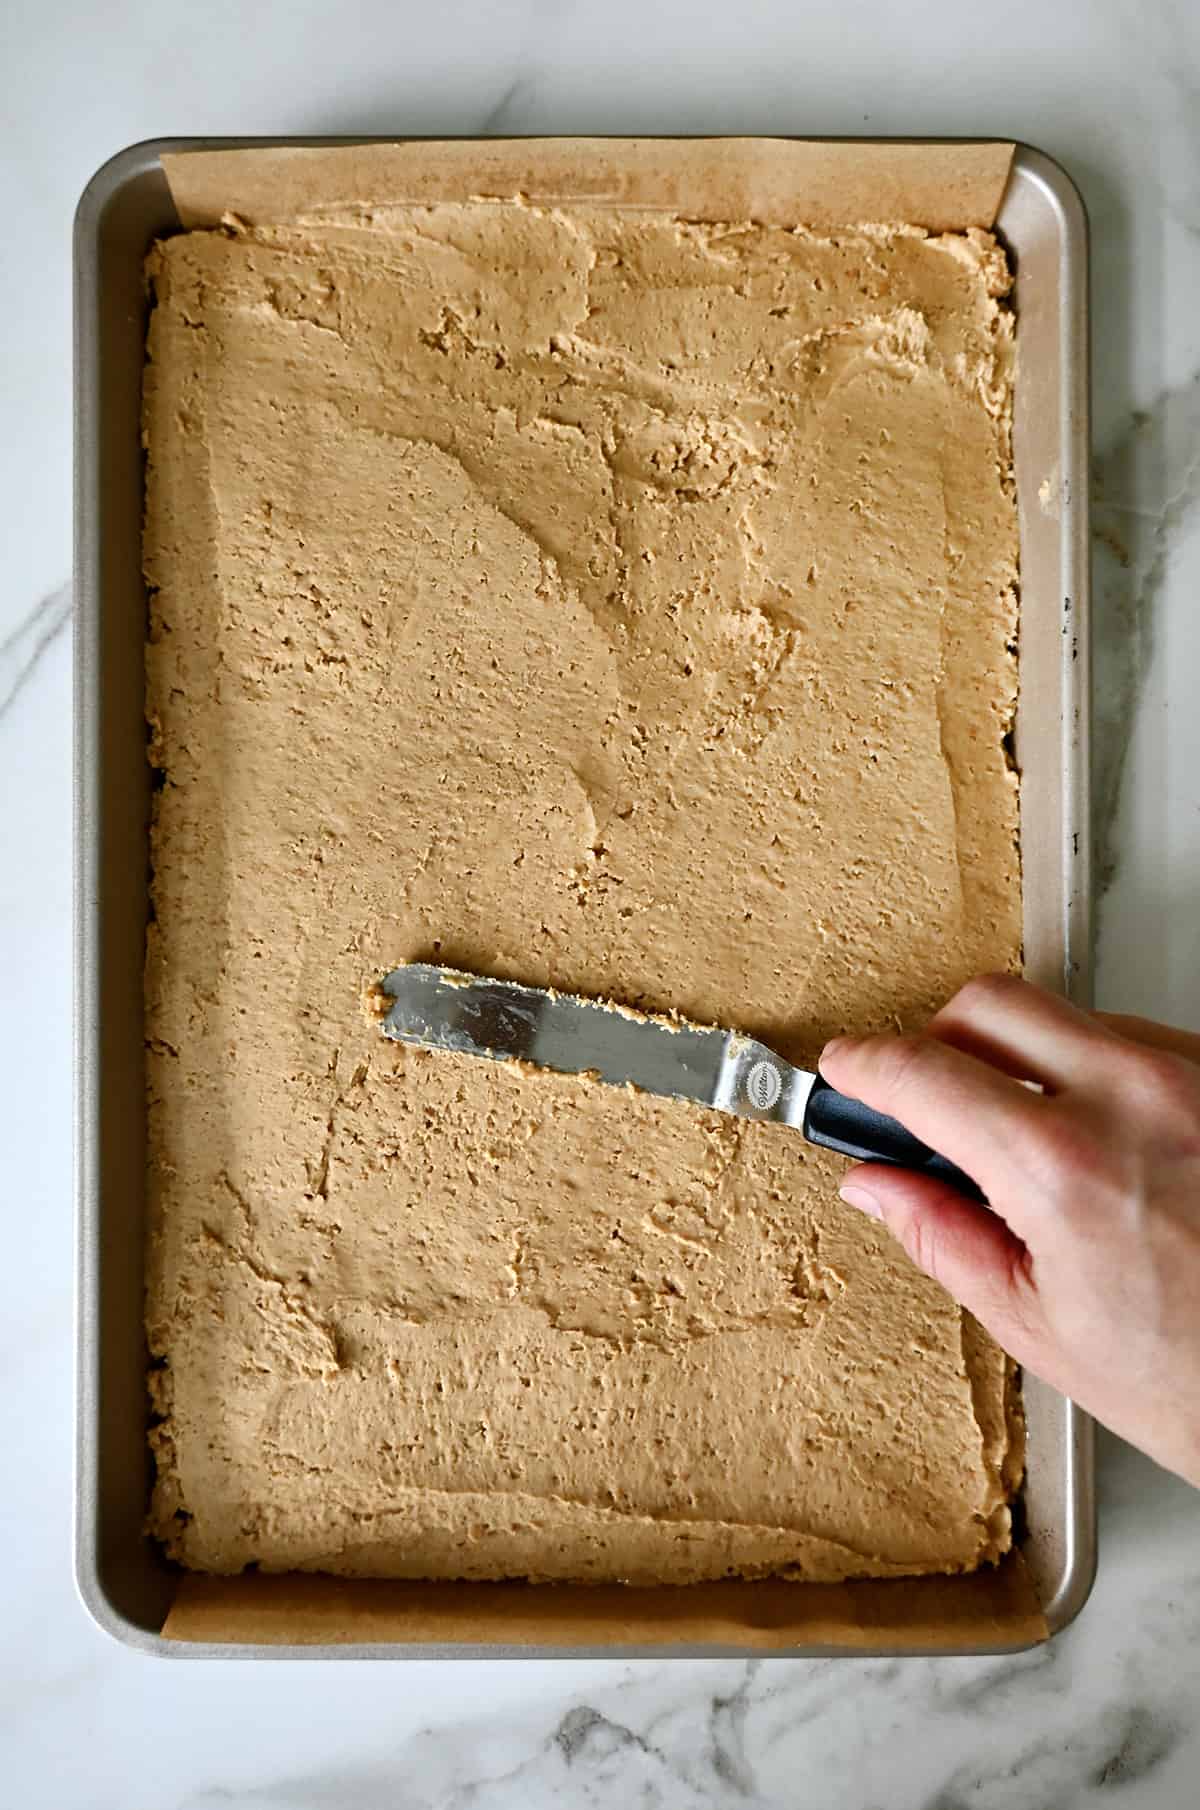 A hand holding an offset spatula spreads peanut butter bars into an even layer on a baking sheet.